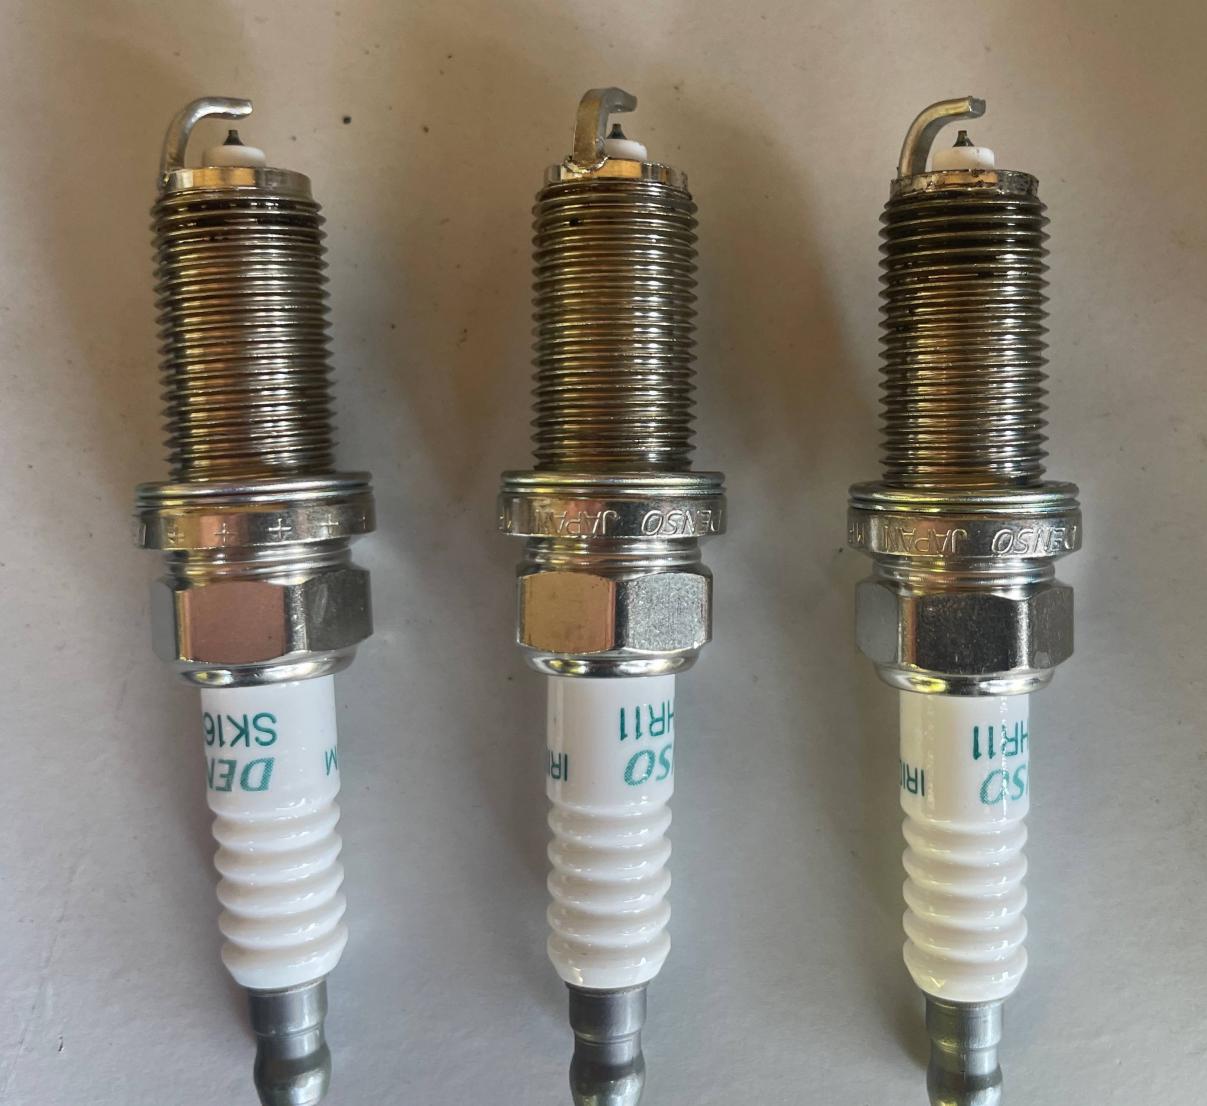 Do these spark plugs look OK?-img_5938-jpg